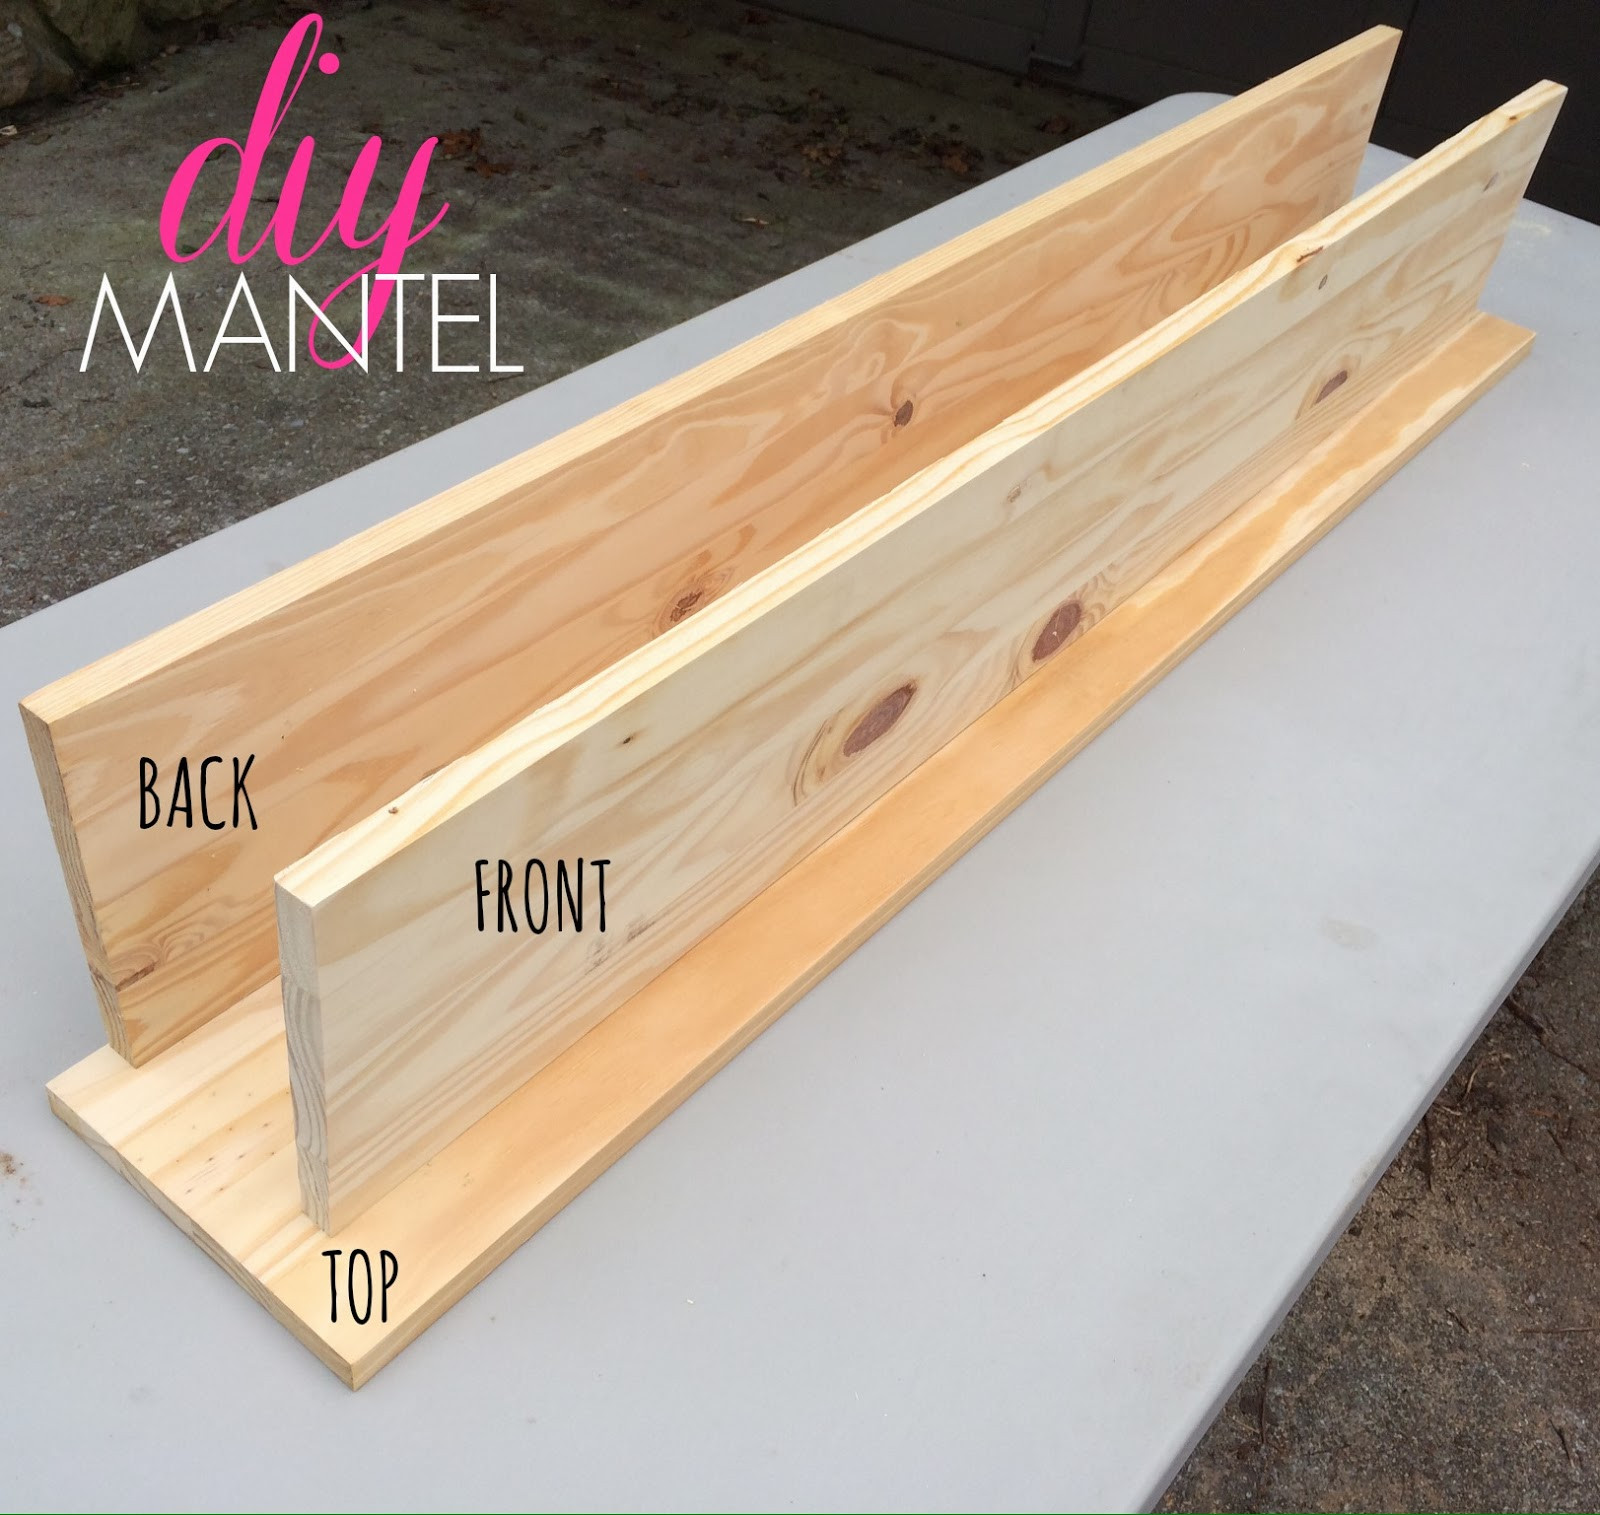 Best ideas about DIY Mantel Shelf Plans
. Save or Pin 54 Build A Mantel Shelves Woodworking Diy Faux Fireplace Now.